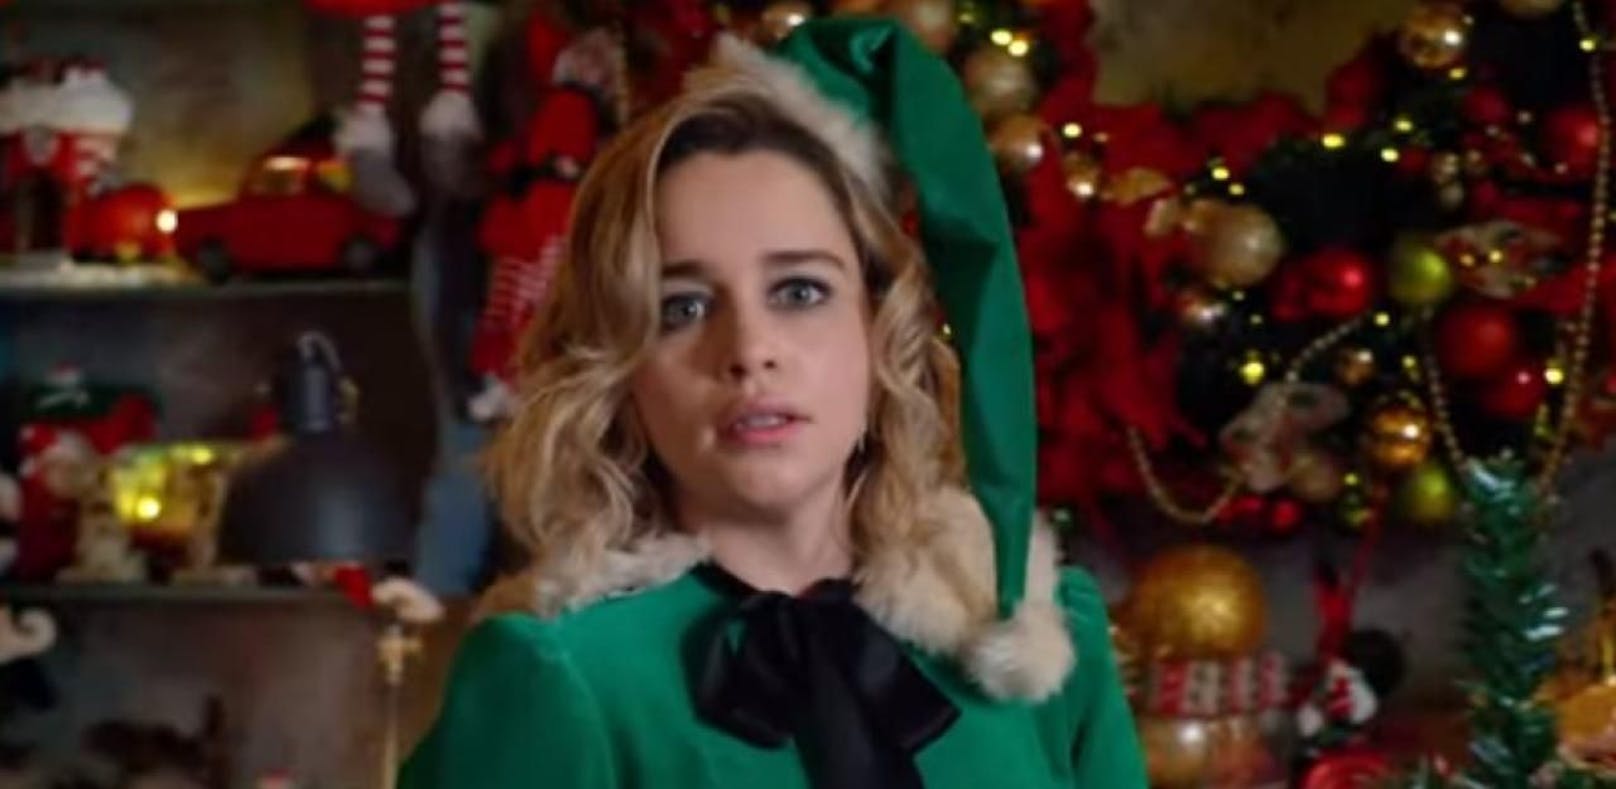 Emilia Clarke als grantige Elfe in "Last Christmas"